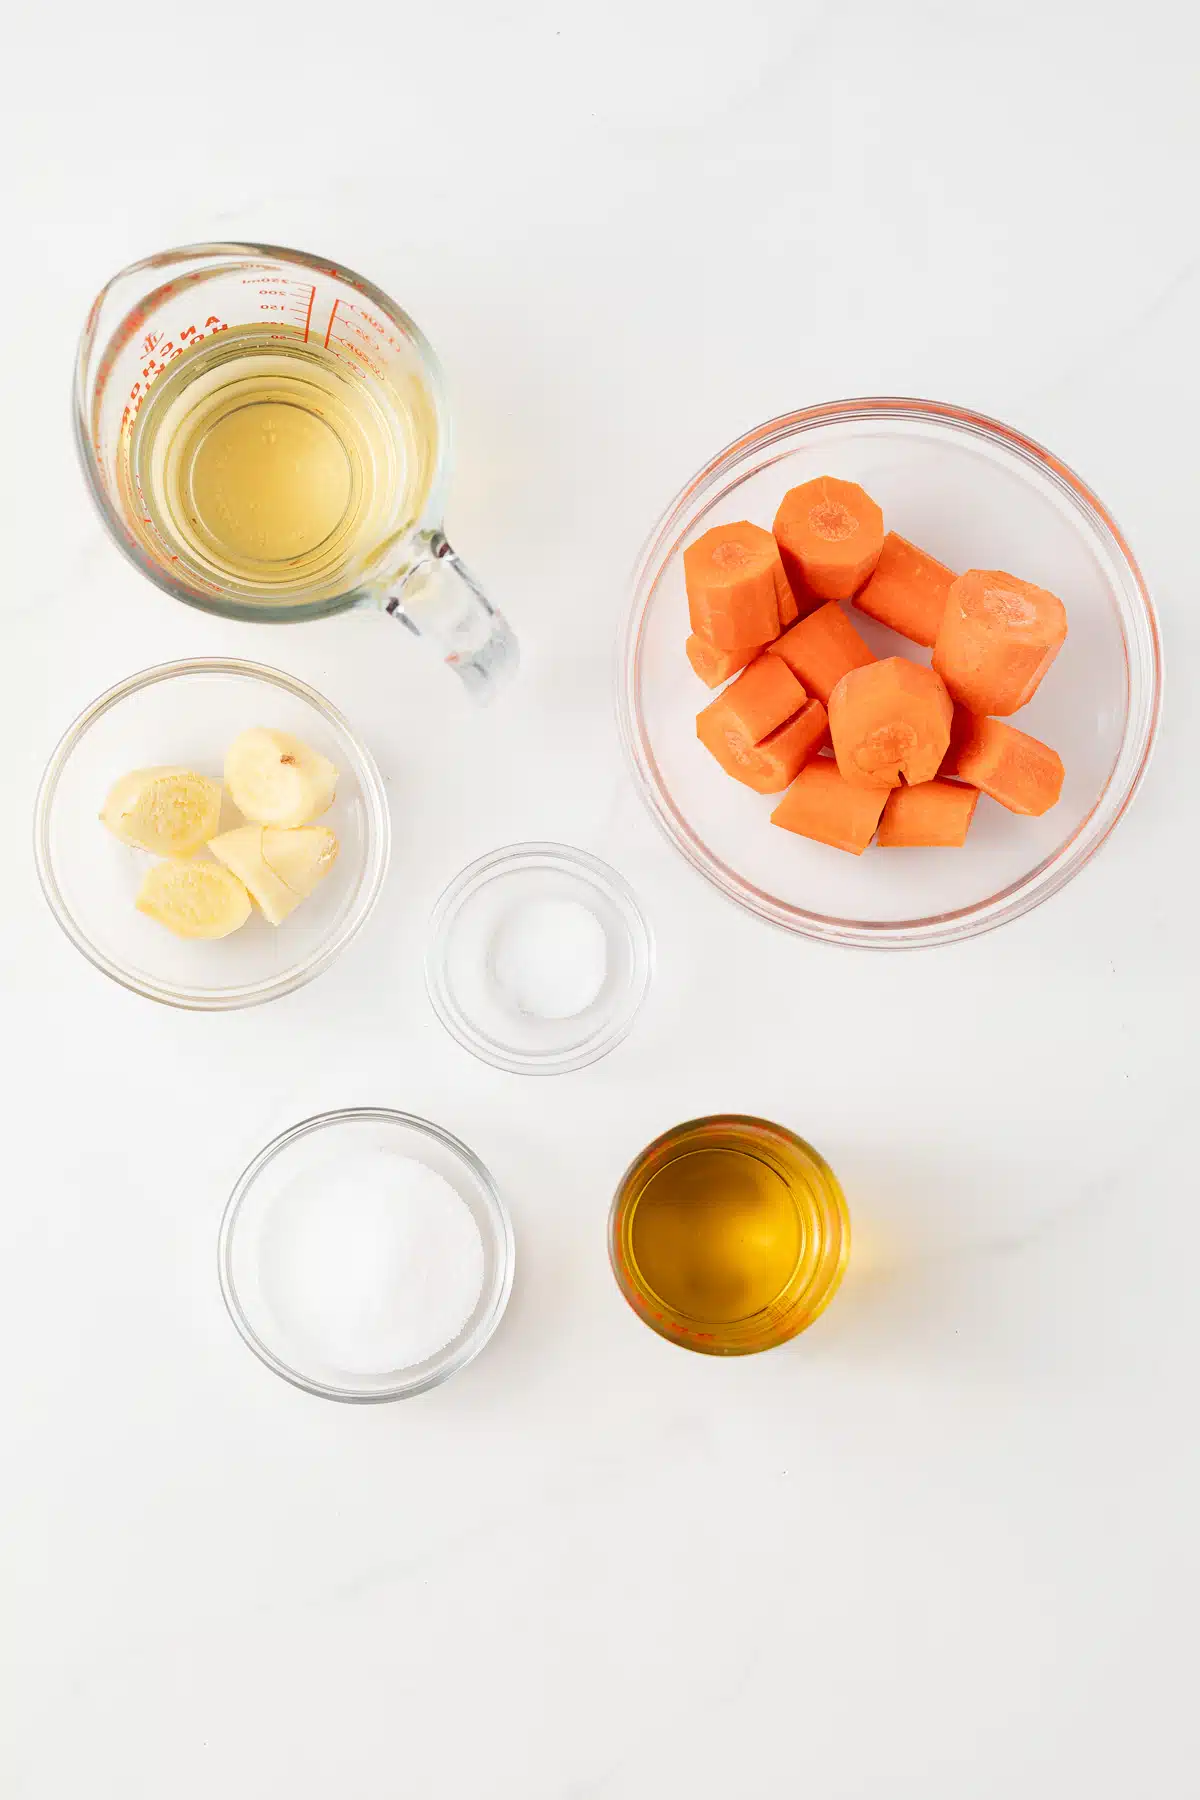 Ingredients for carrot ginger dressing.